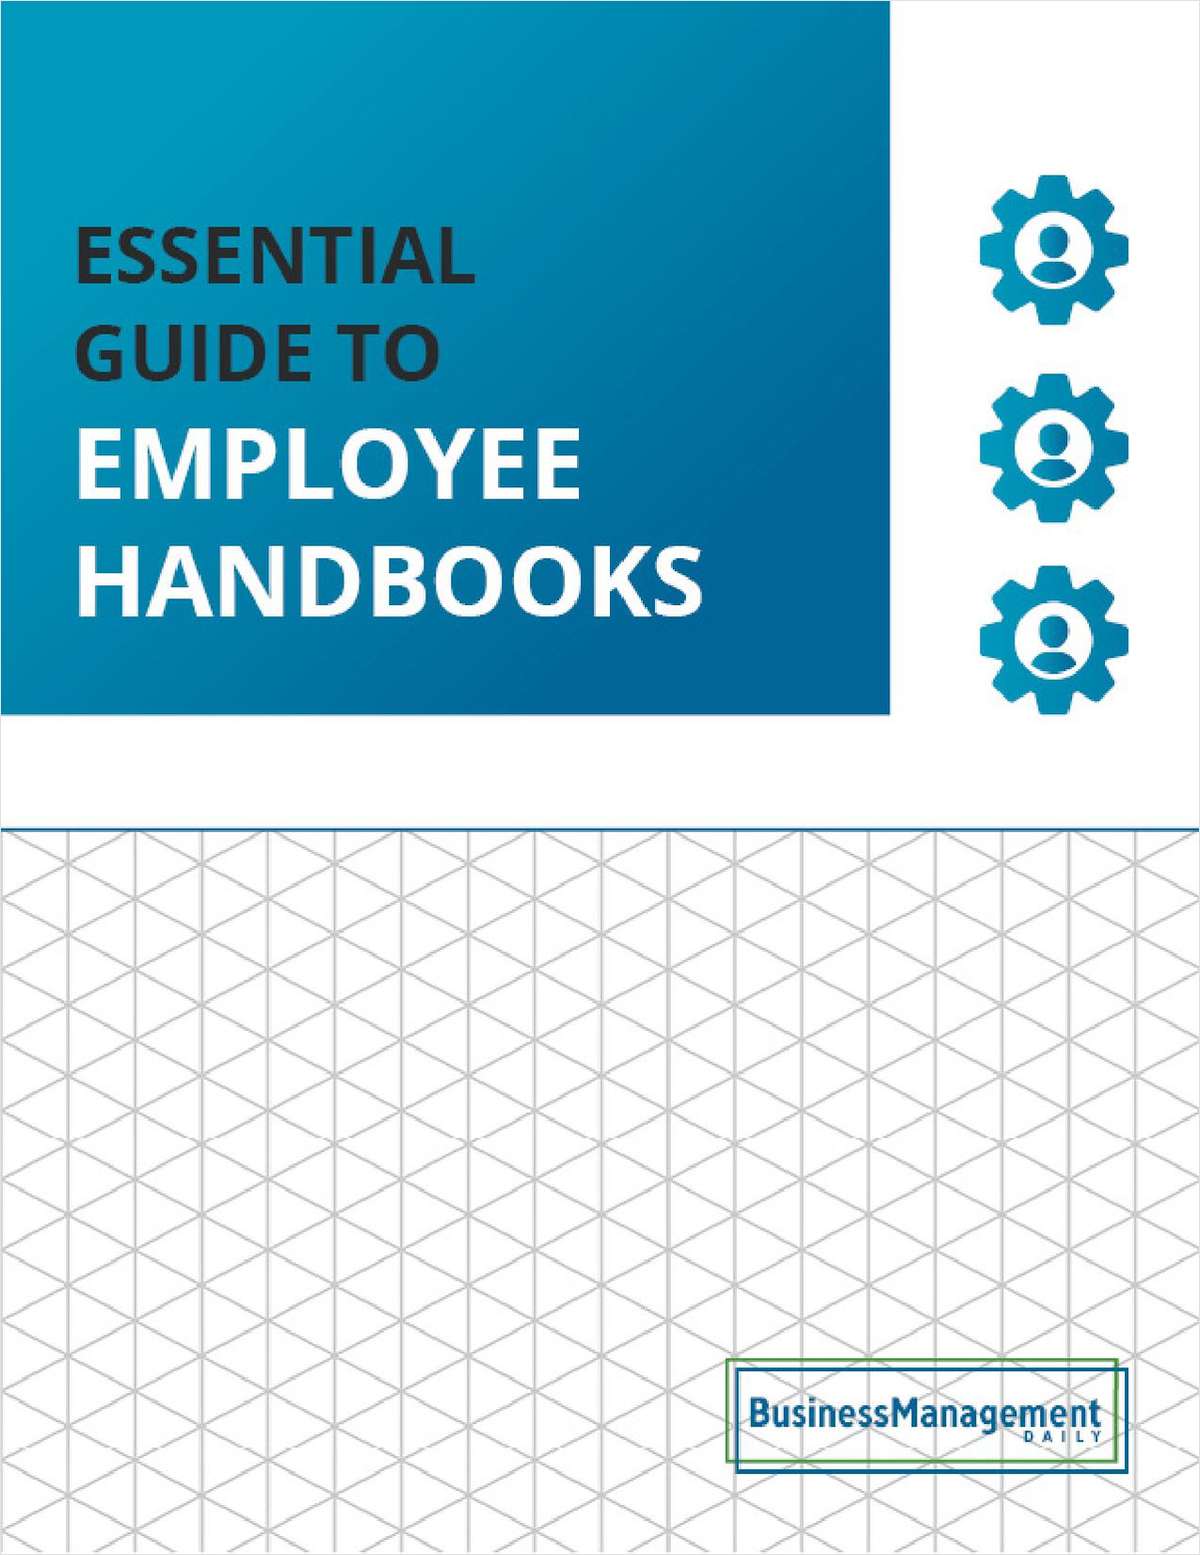 The Essential Employee Handbook